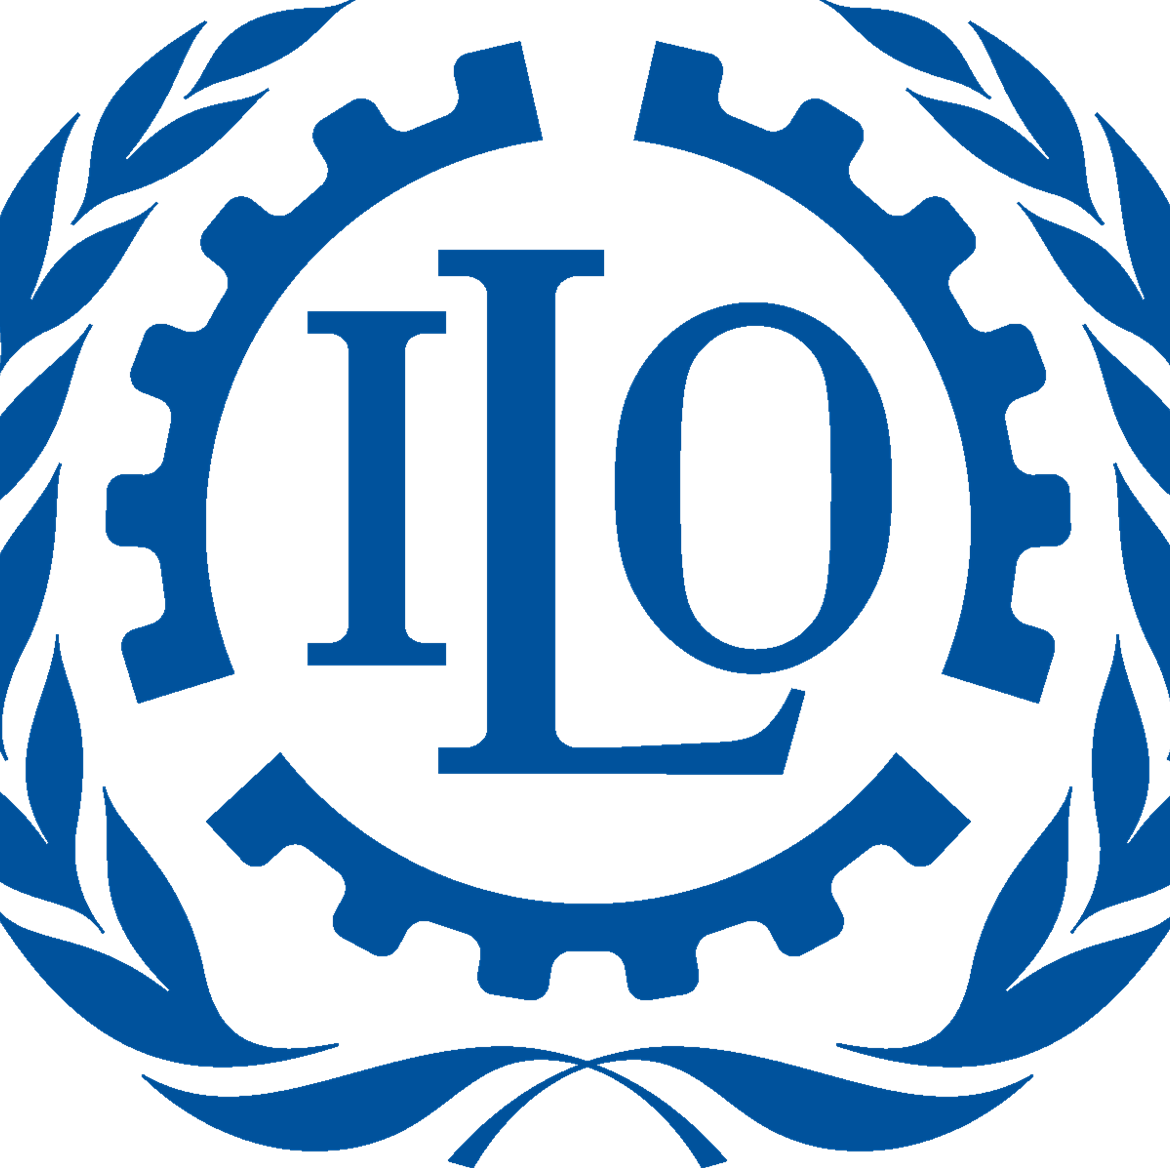 International Labour Organisation logo